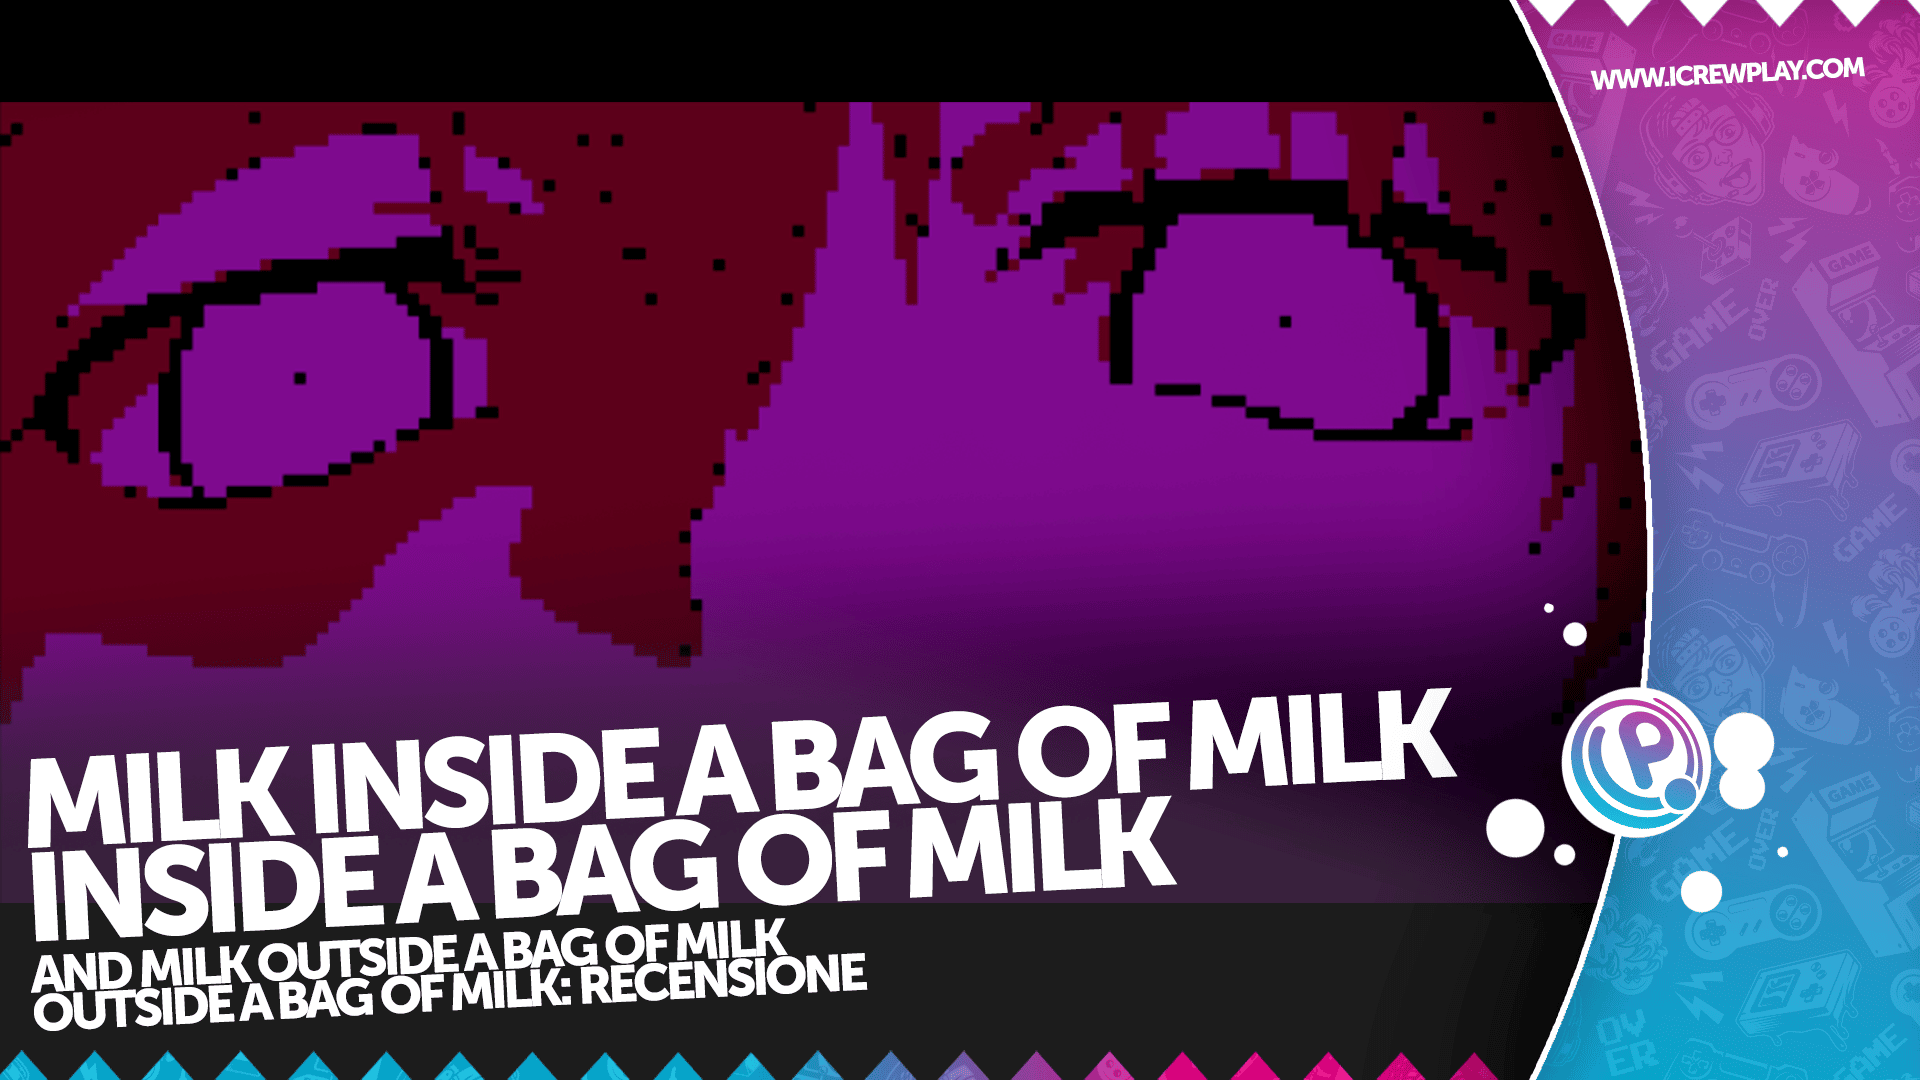 Milk inside a bag of milk inside a bag of milk and Milk outside a bag of milk outside a bag of milk: recensione per Nintendo Switch 2